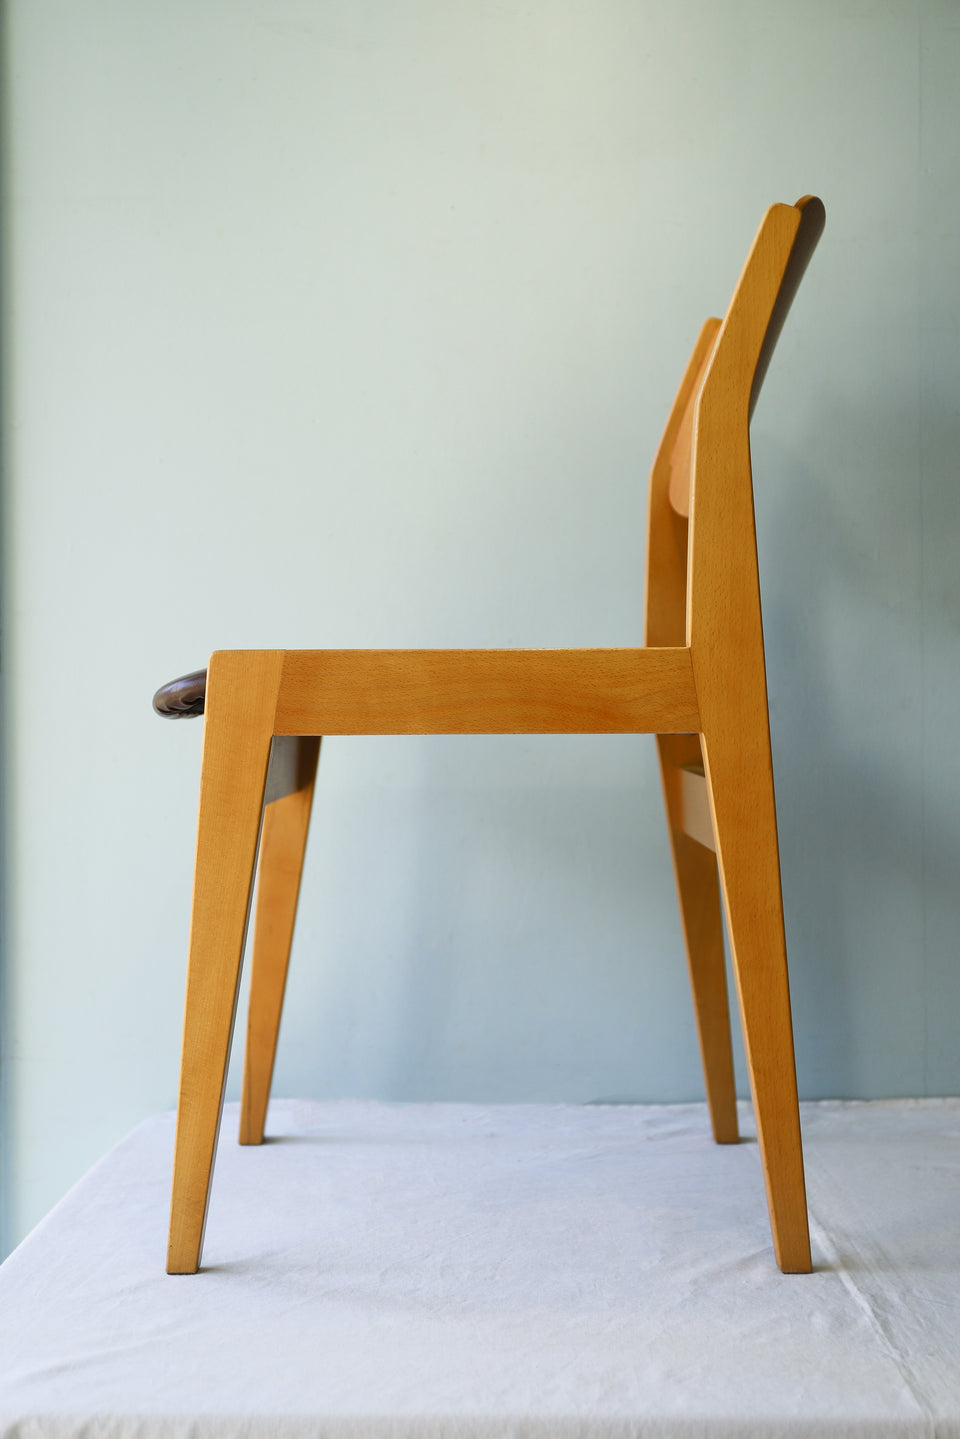 Tendo Book Chair Japanese Modern/天童木工 ブックチェア ダイニングチェア 椅子 水之江忠臣 ジャパニーズモダン